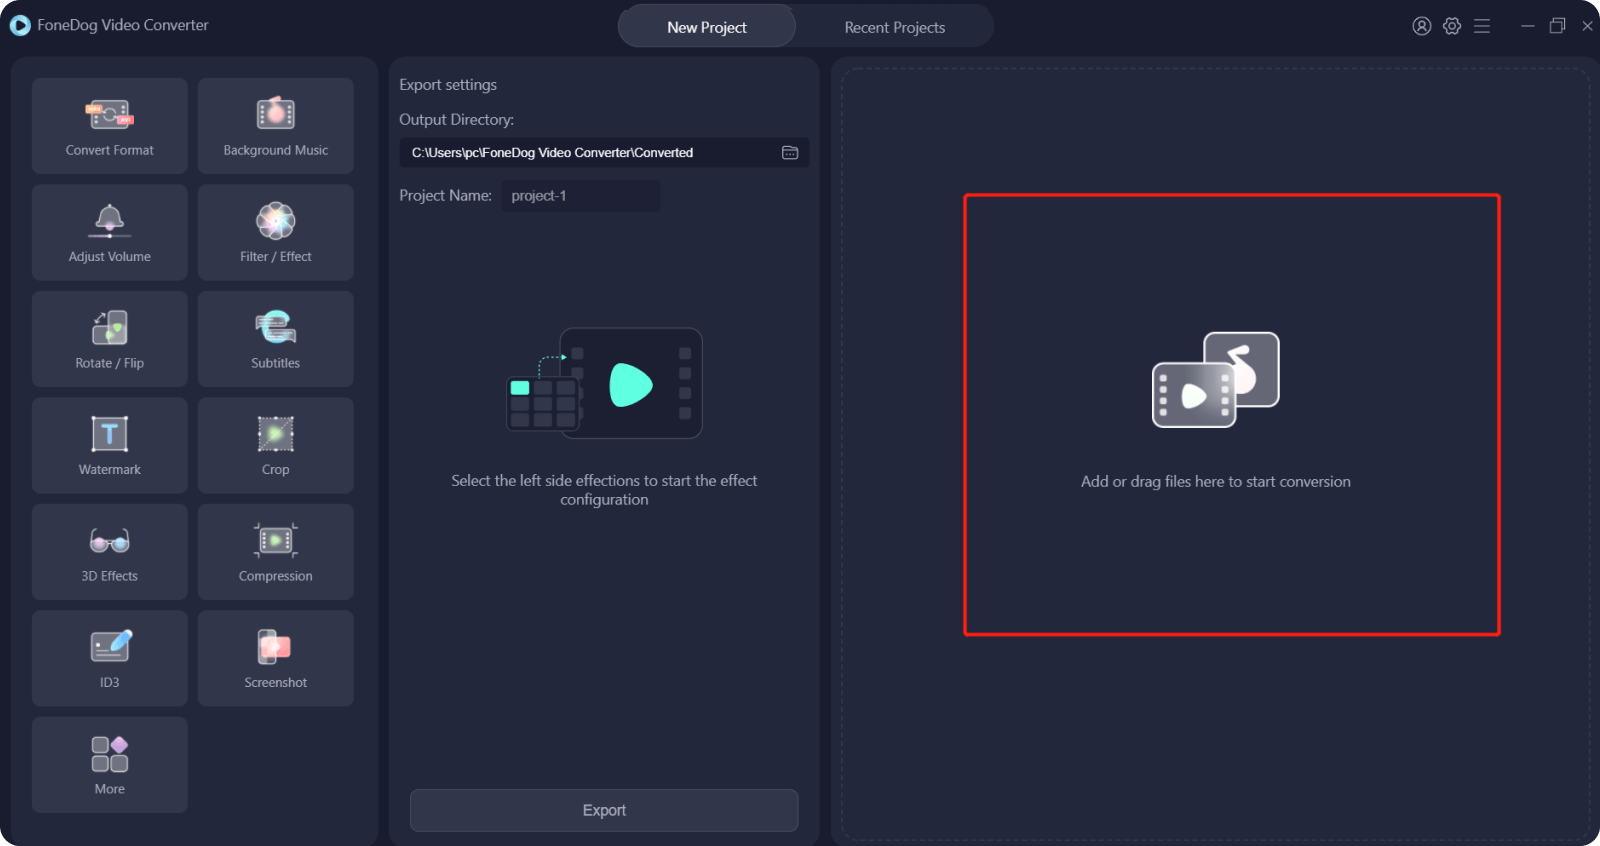 Convert A Video to Audio Using FoneDog Video Converter